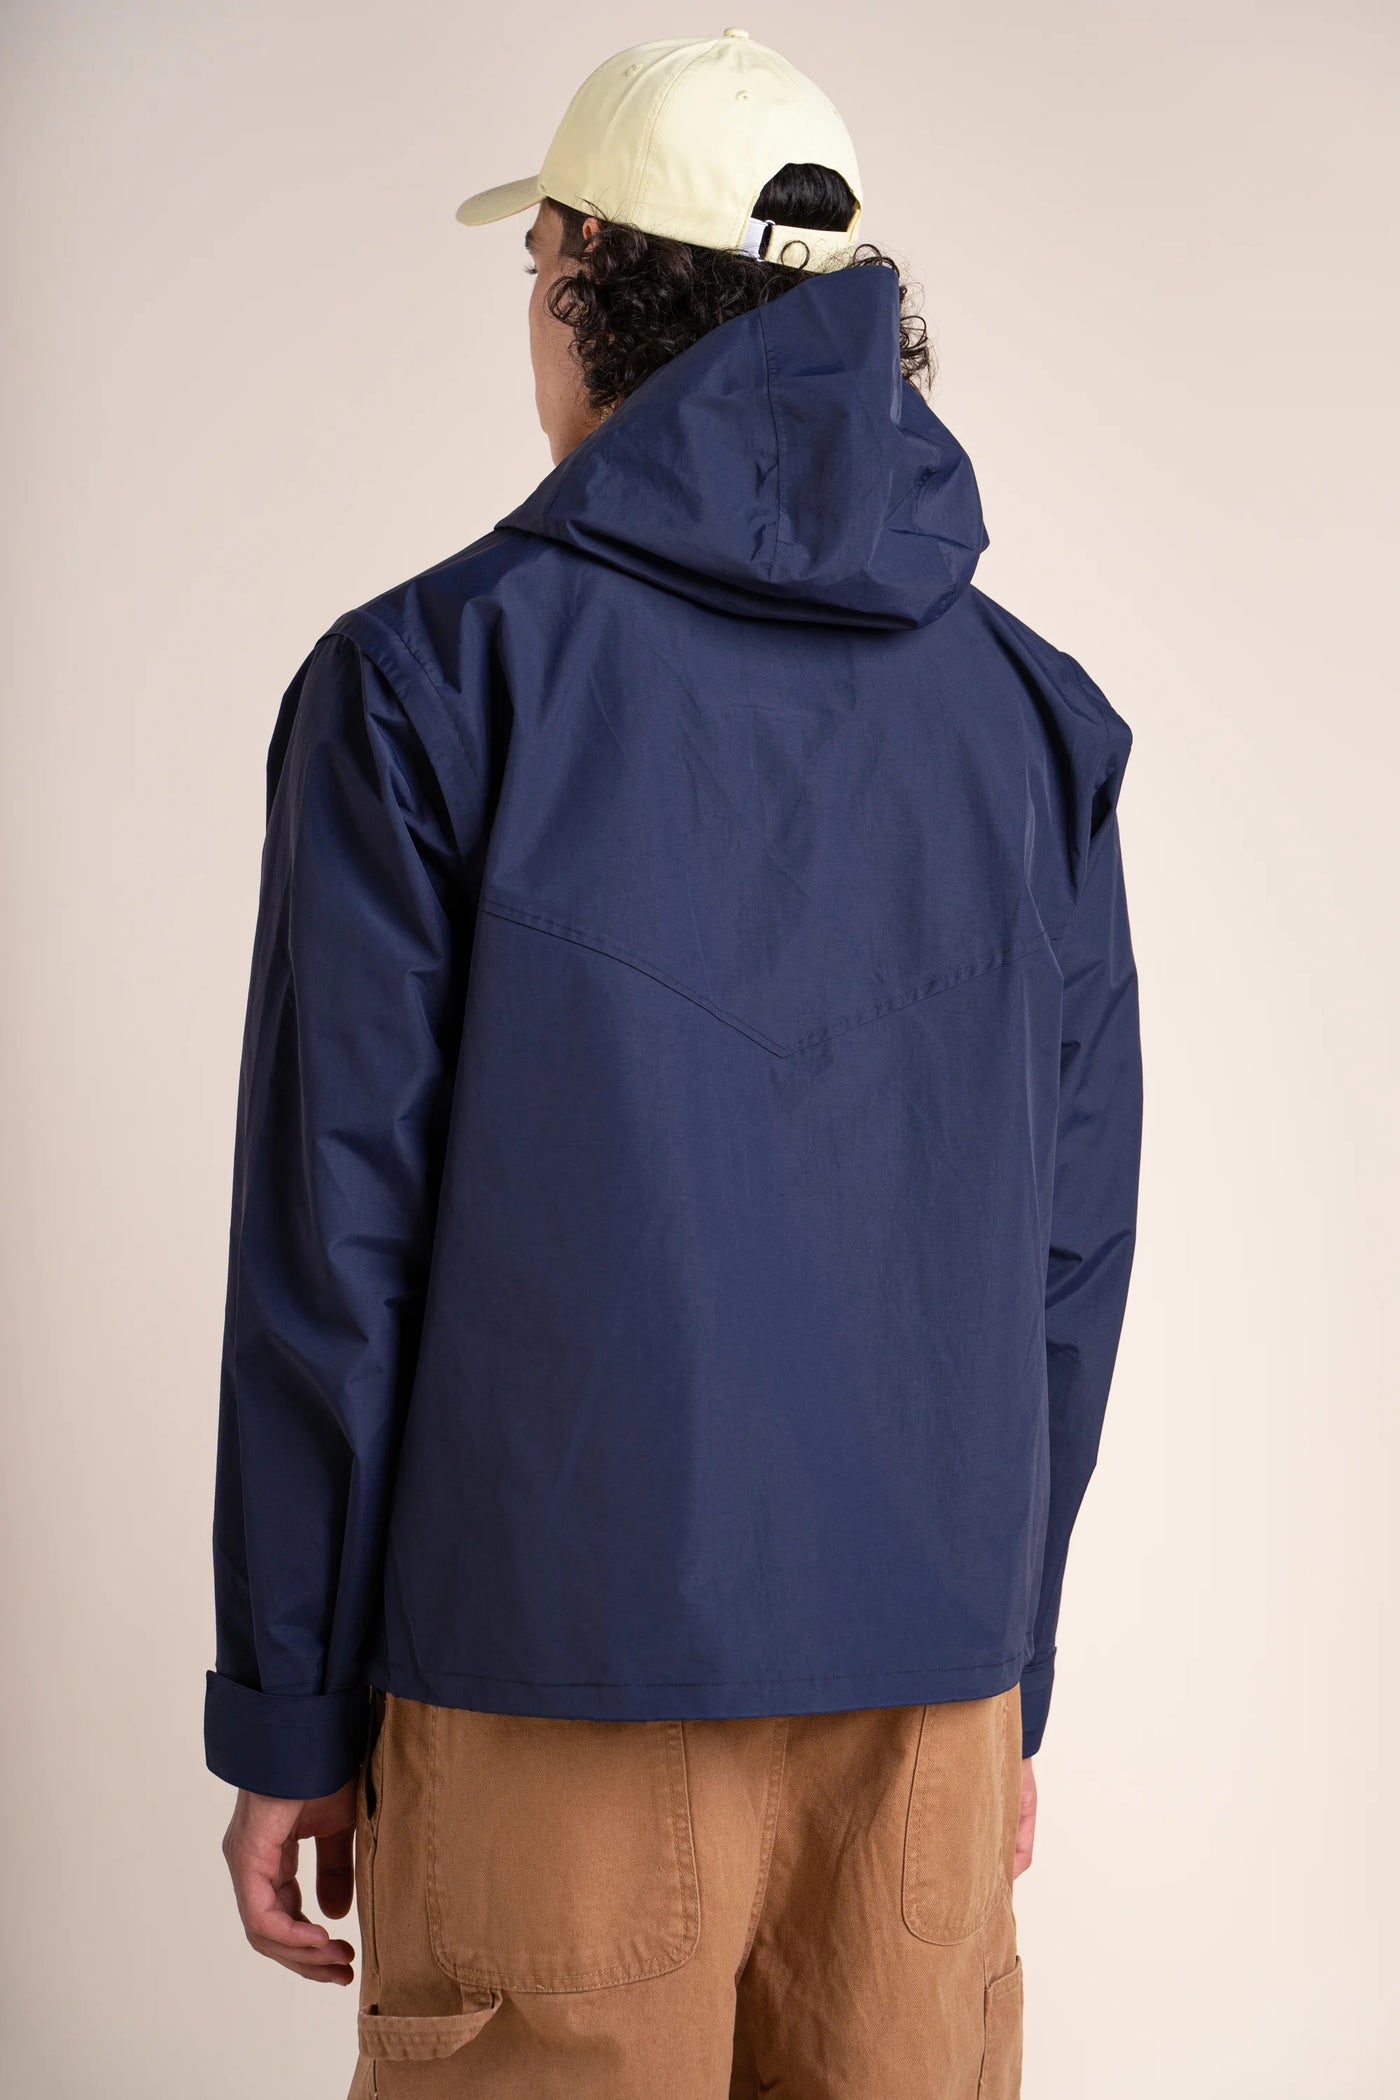 Saint Cyr - multipocket jacket - Flotte #couleur_indigo